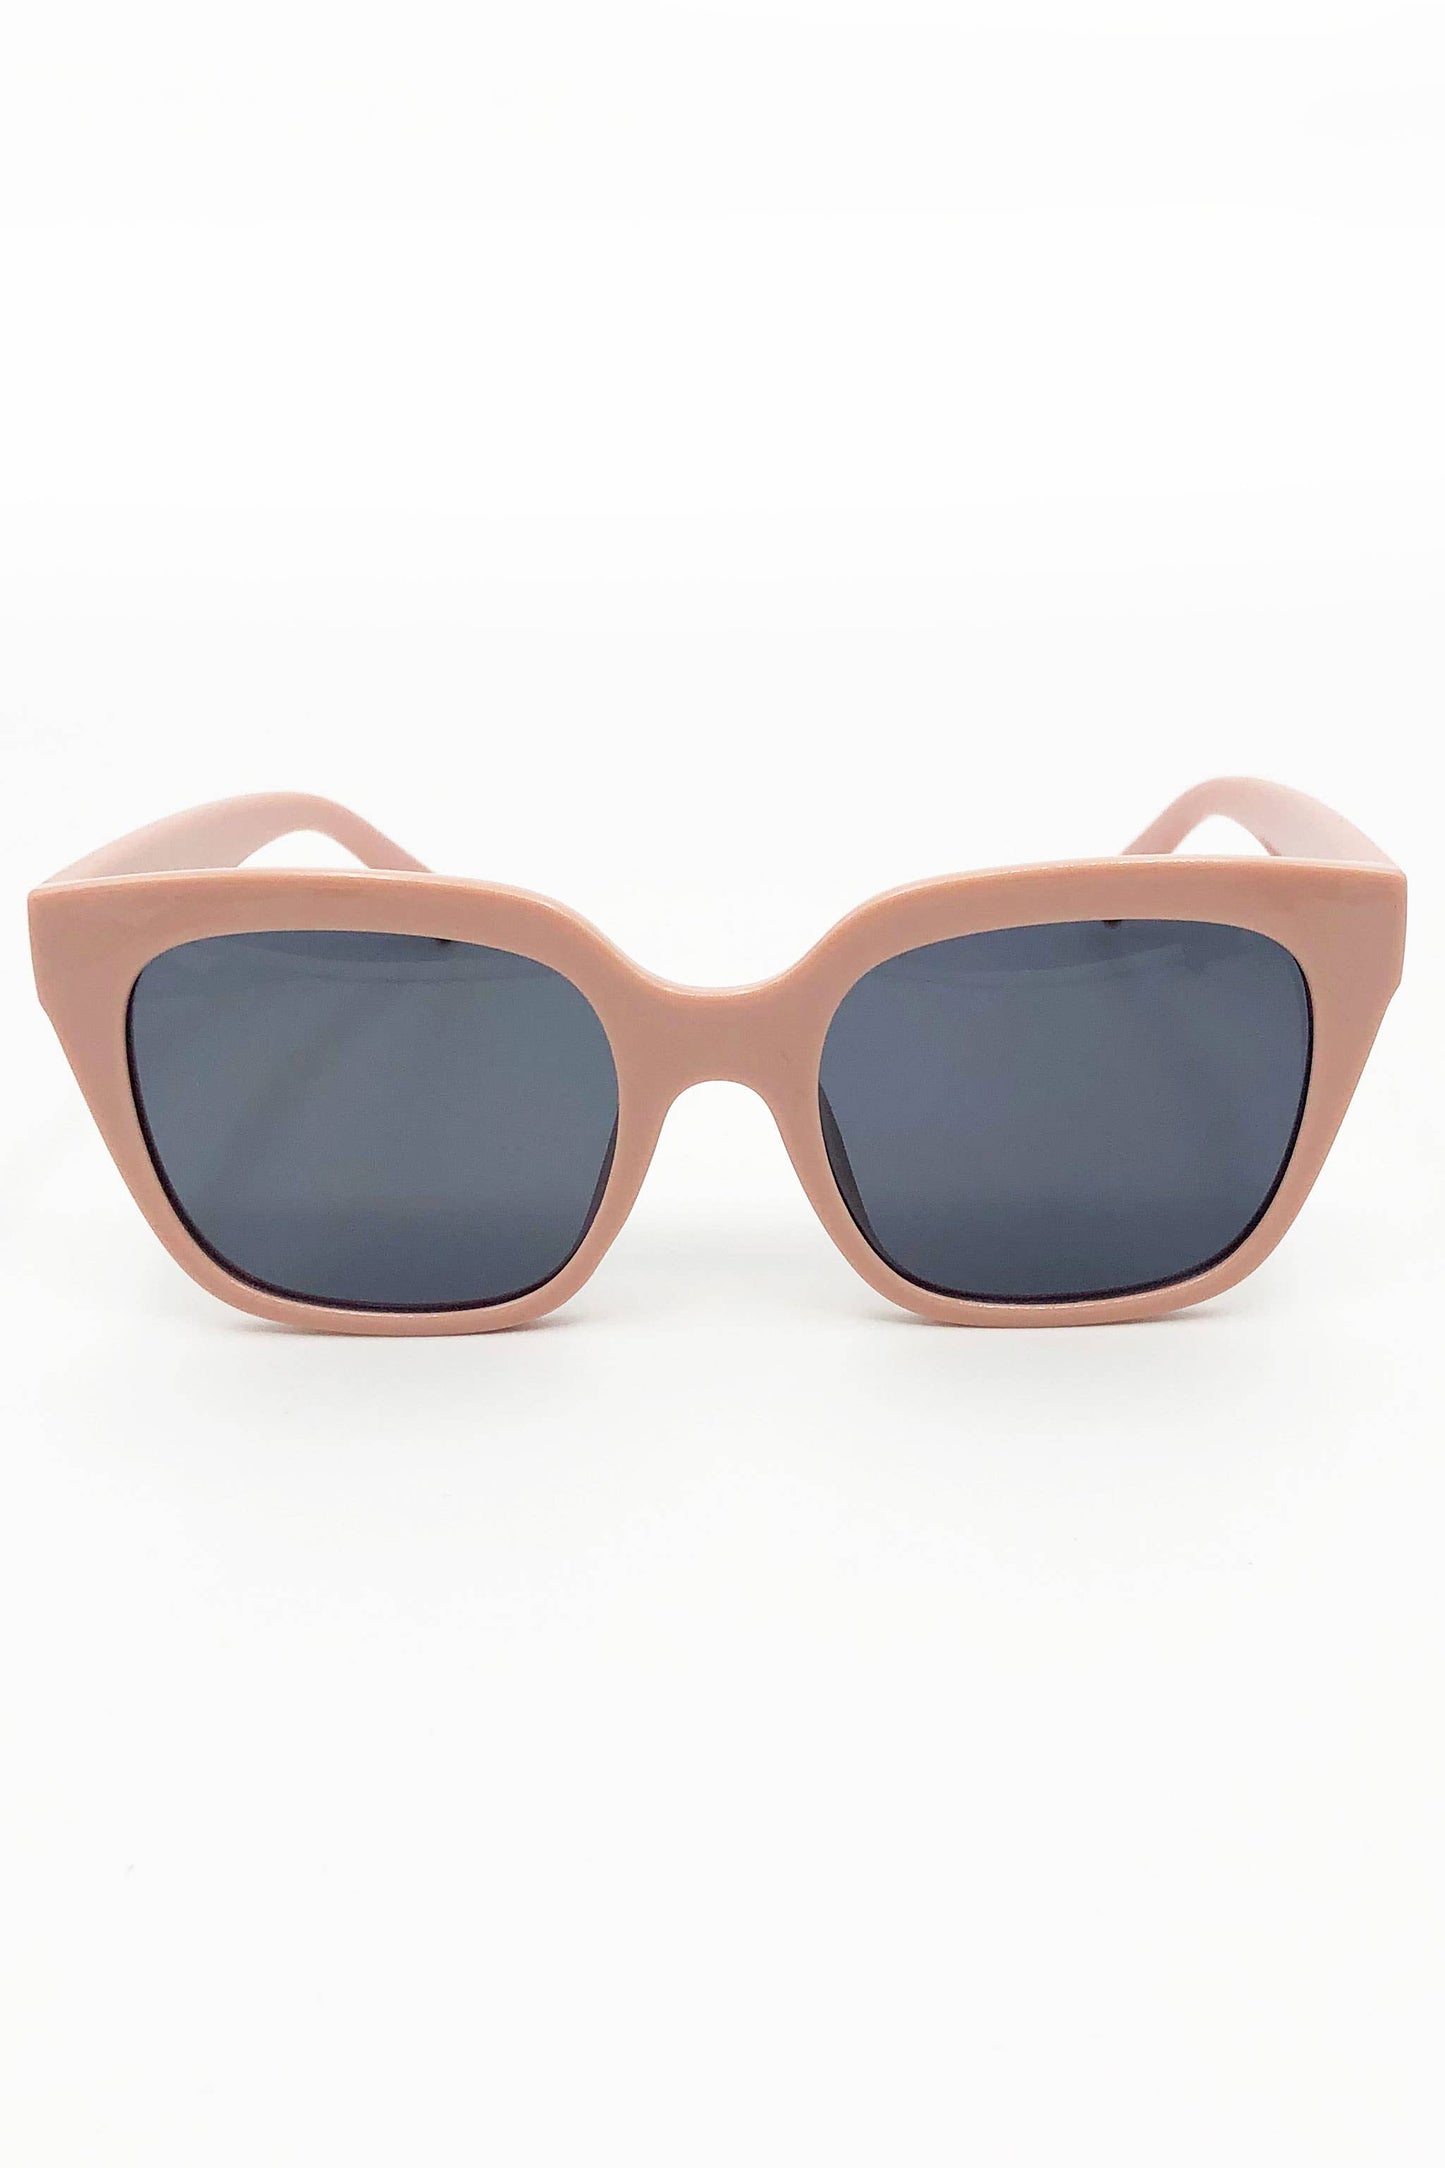 Dusty Pink Sunglasses